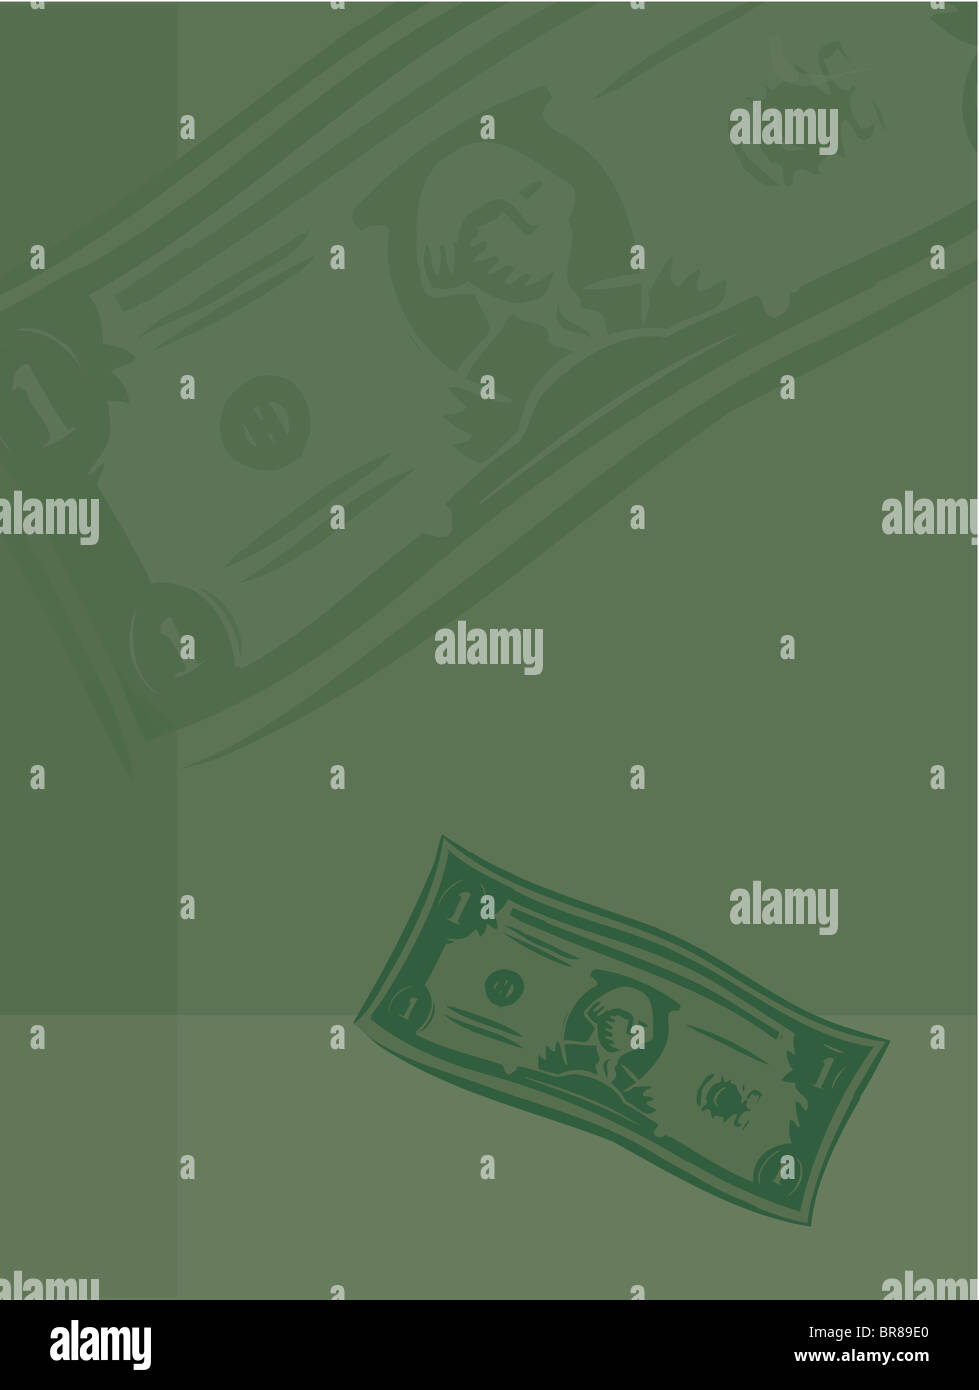 Illustration of American Dollar bills Stock Photo